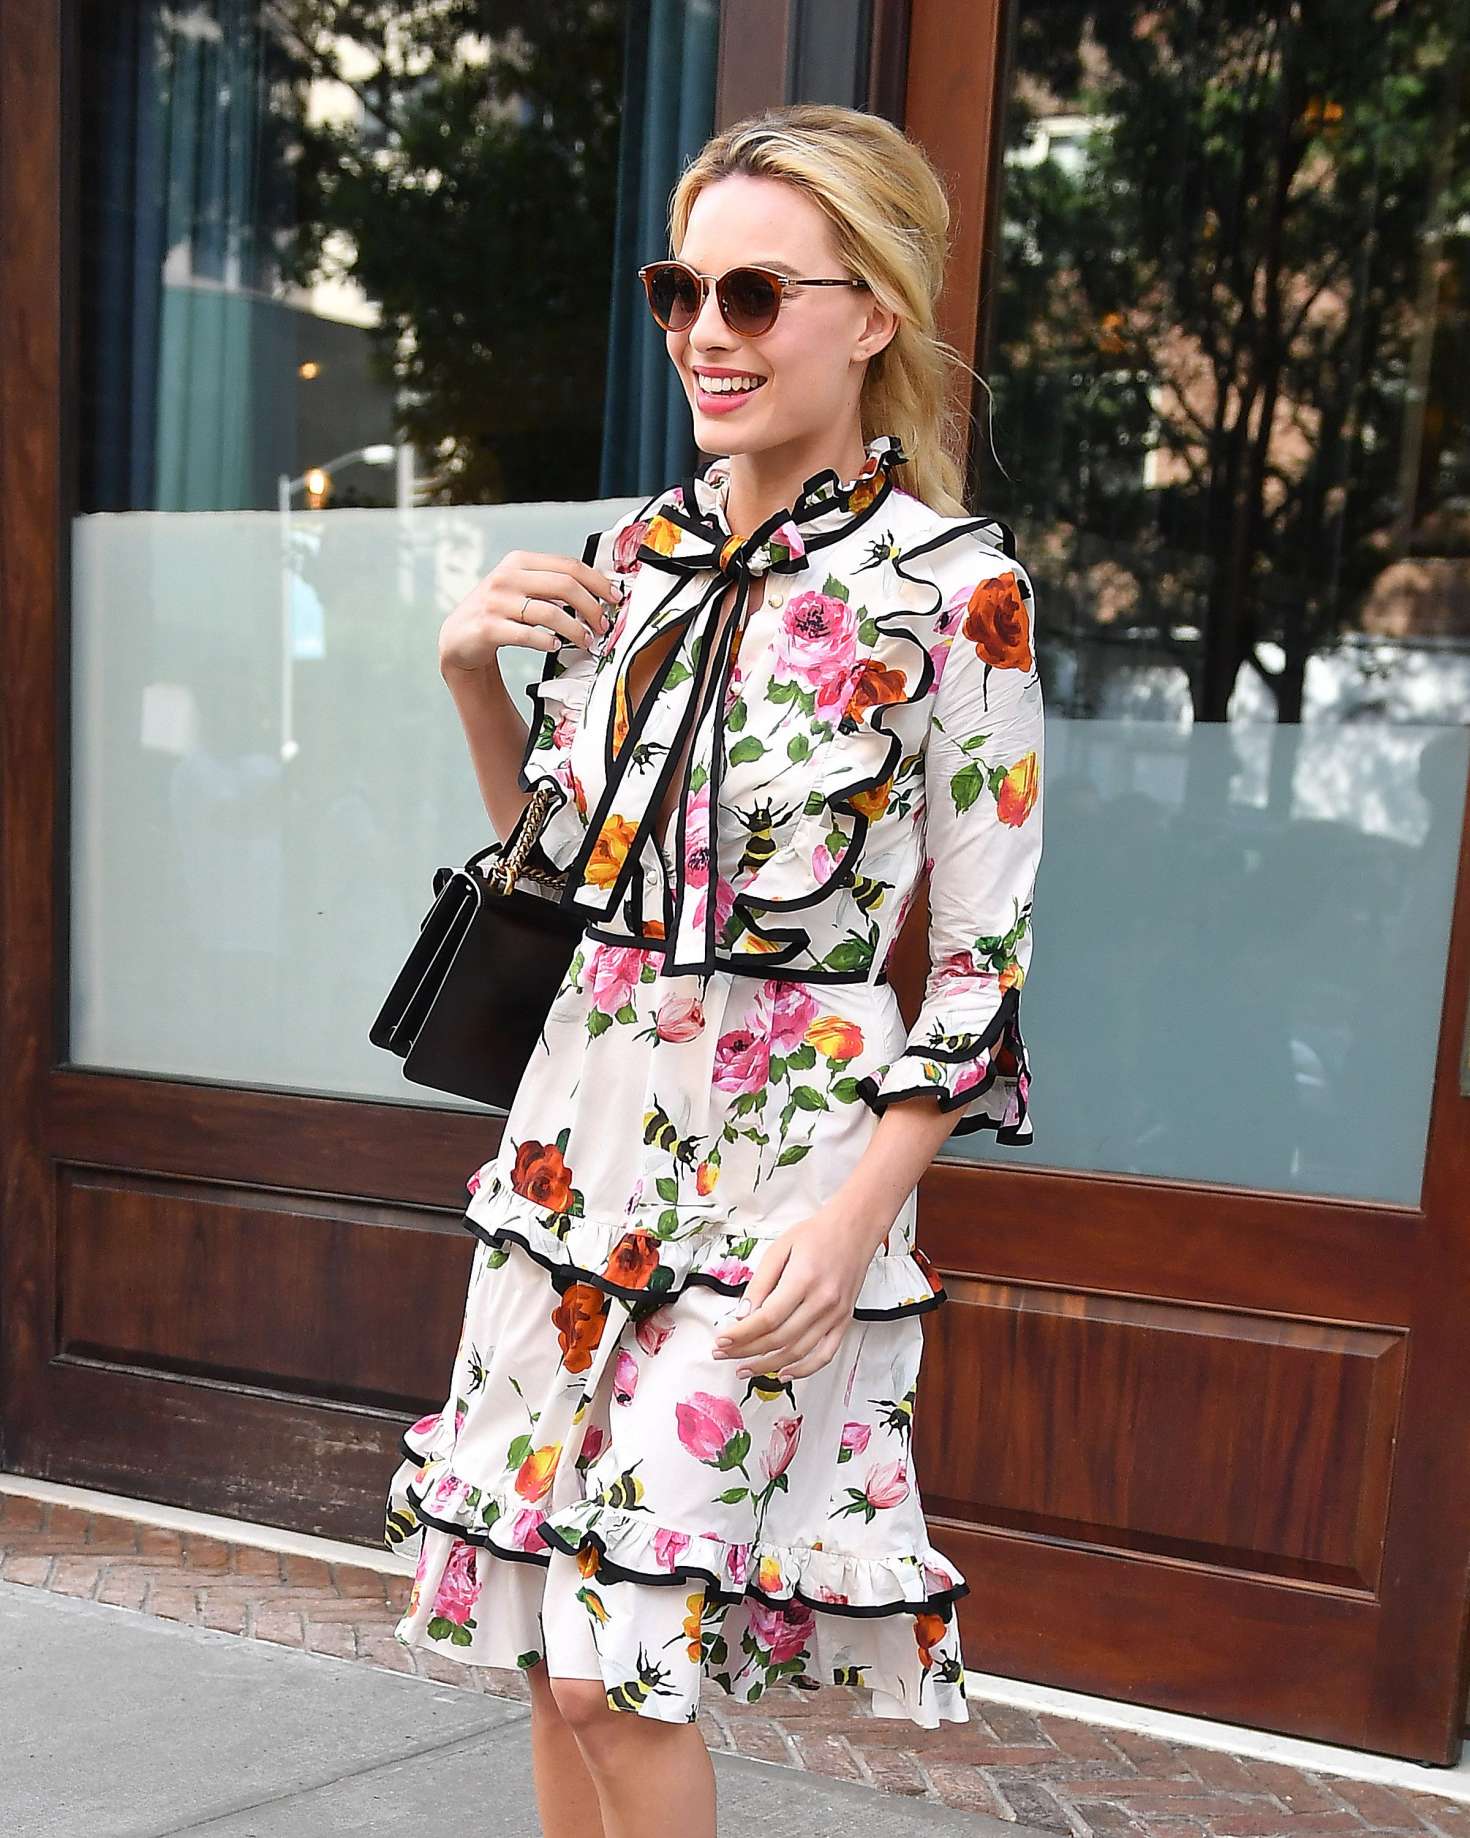 Margot Robbie in Floral Dress in New York City | GotCeleb